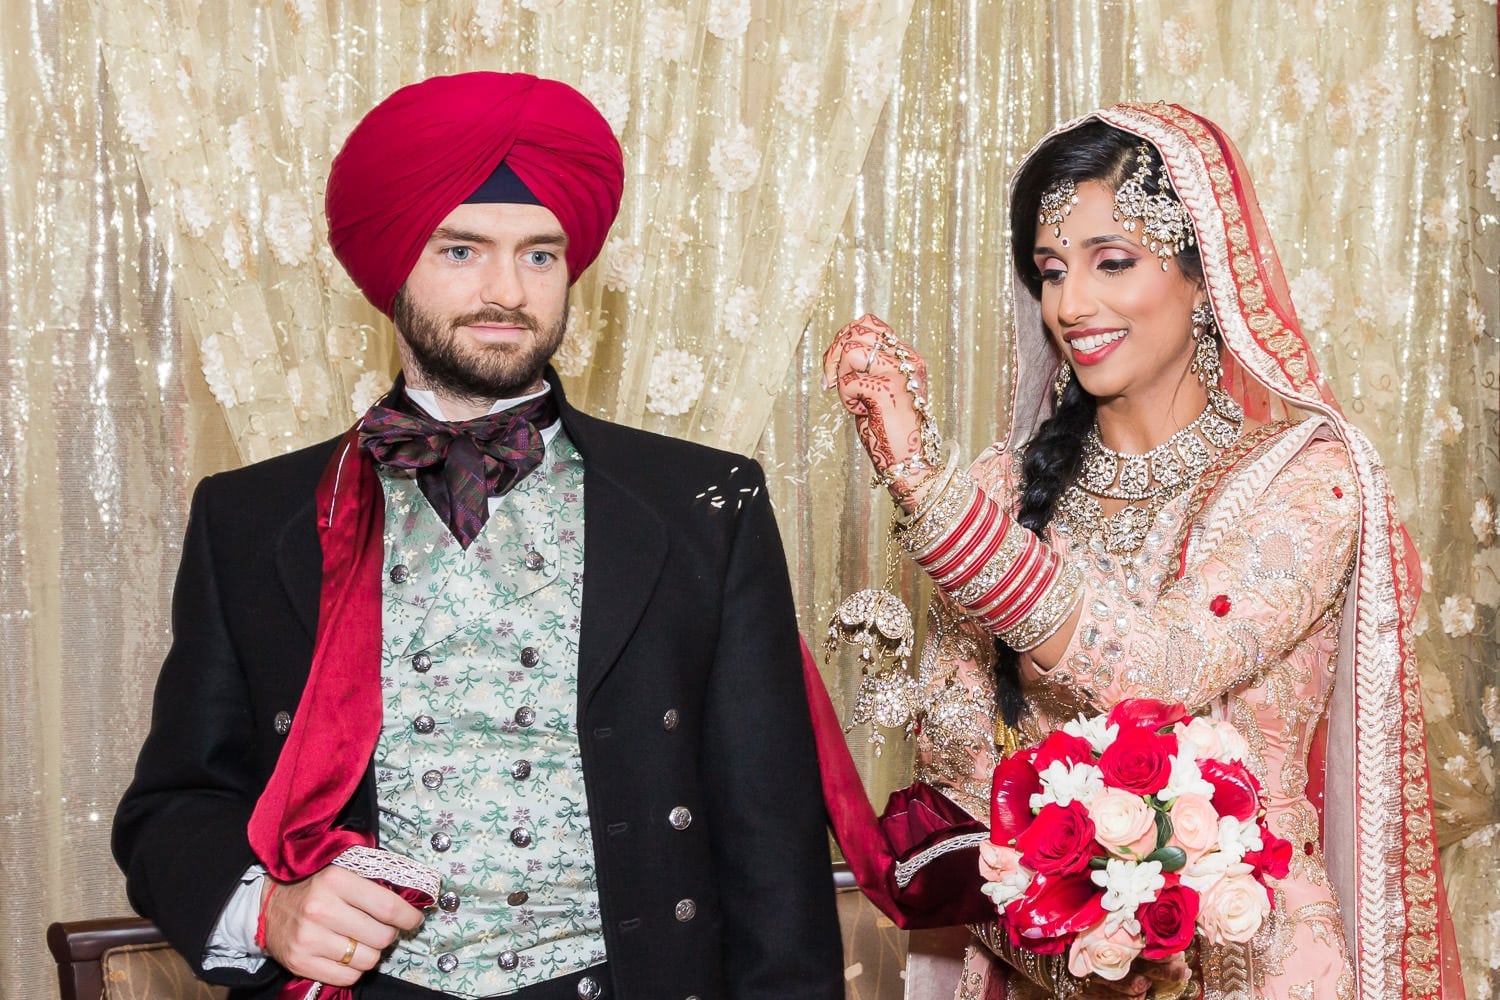 Indian bride throwing rice, Indian and Norwegian wedding | Vancouver Indian wedding photographer